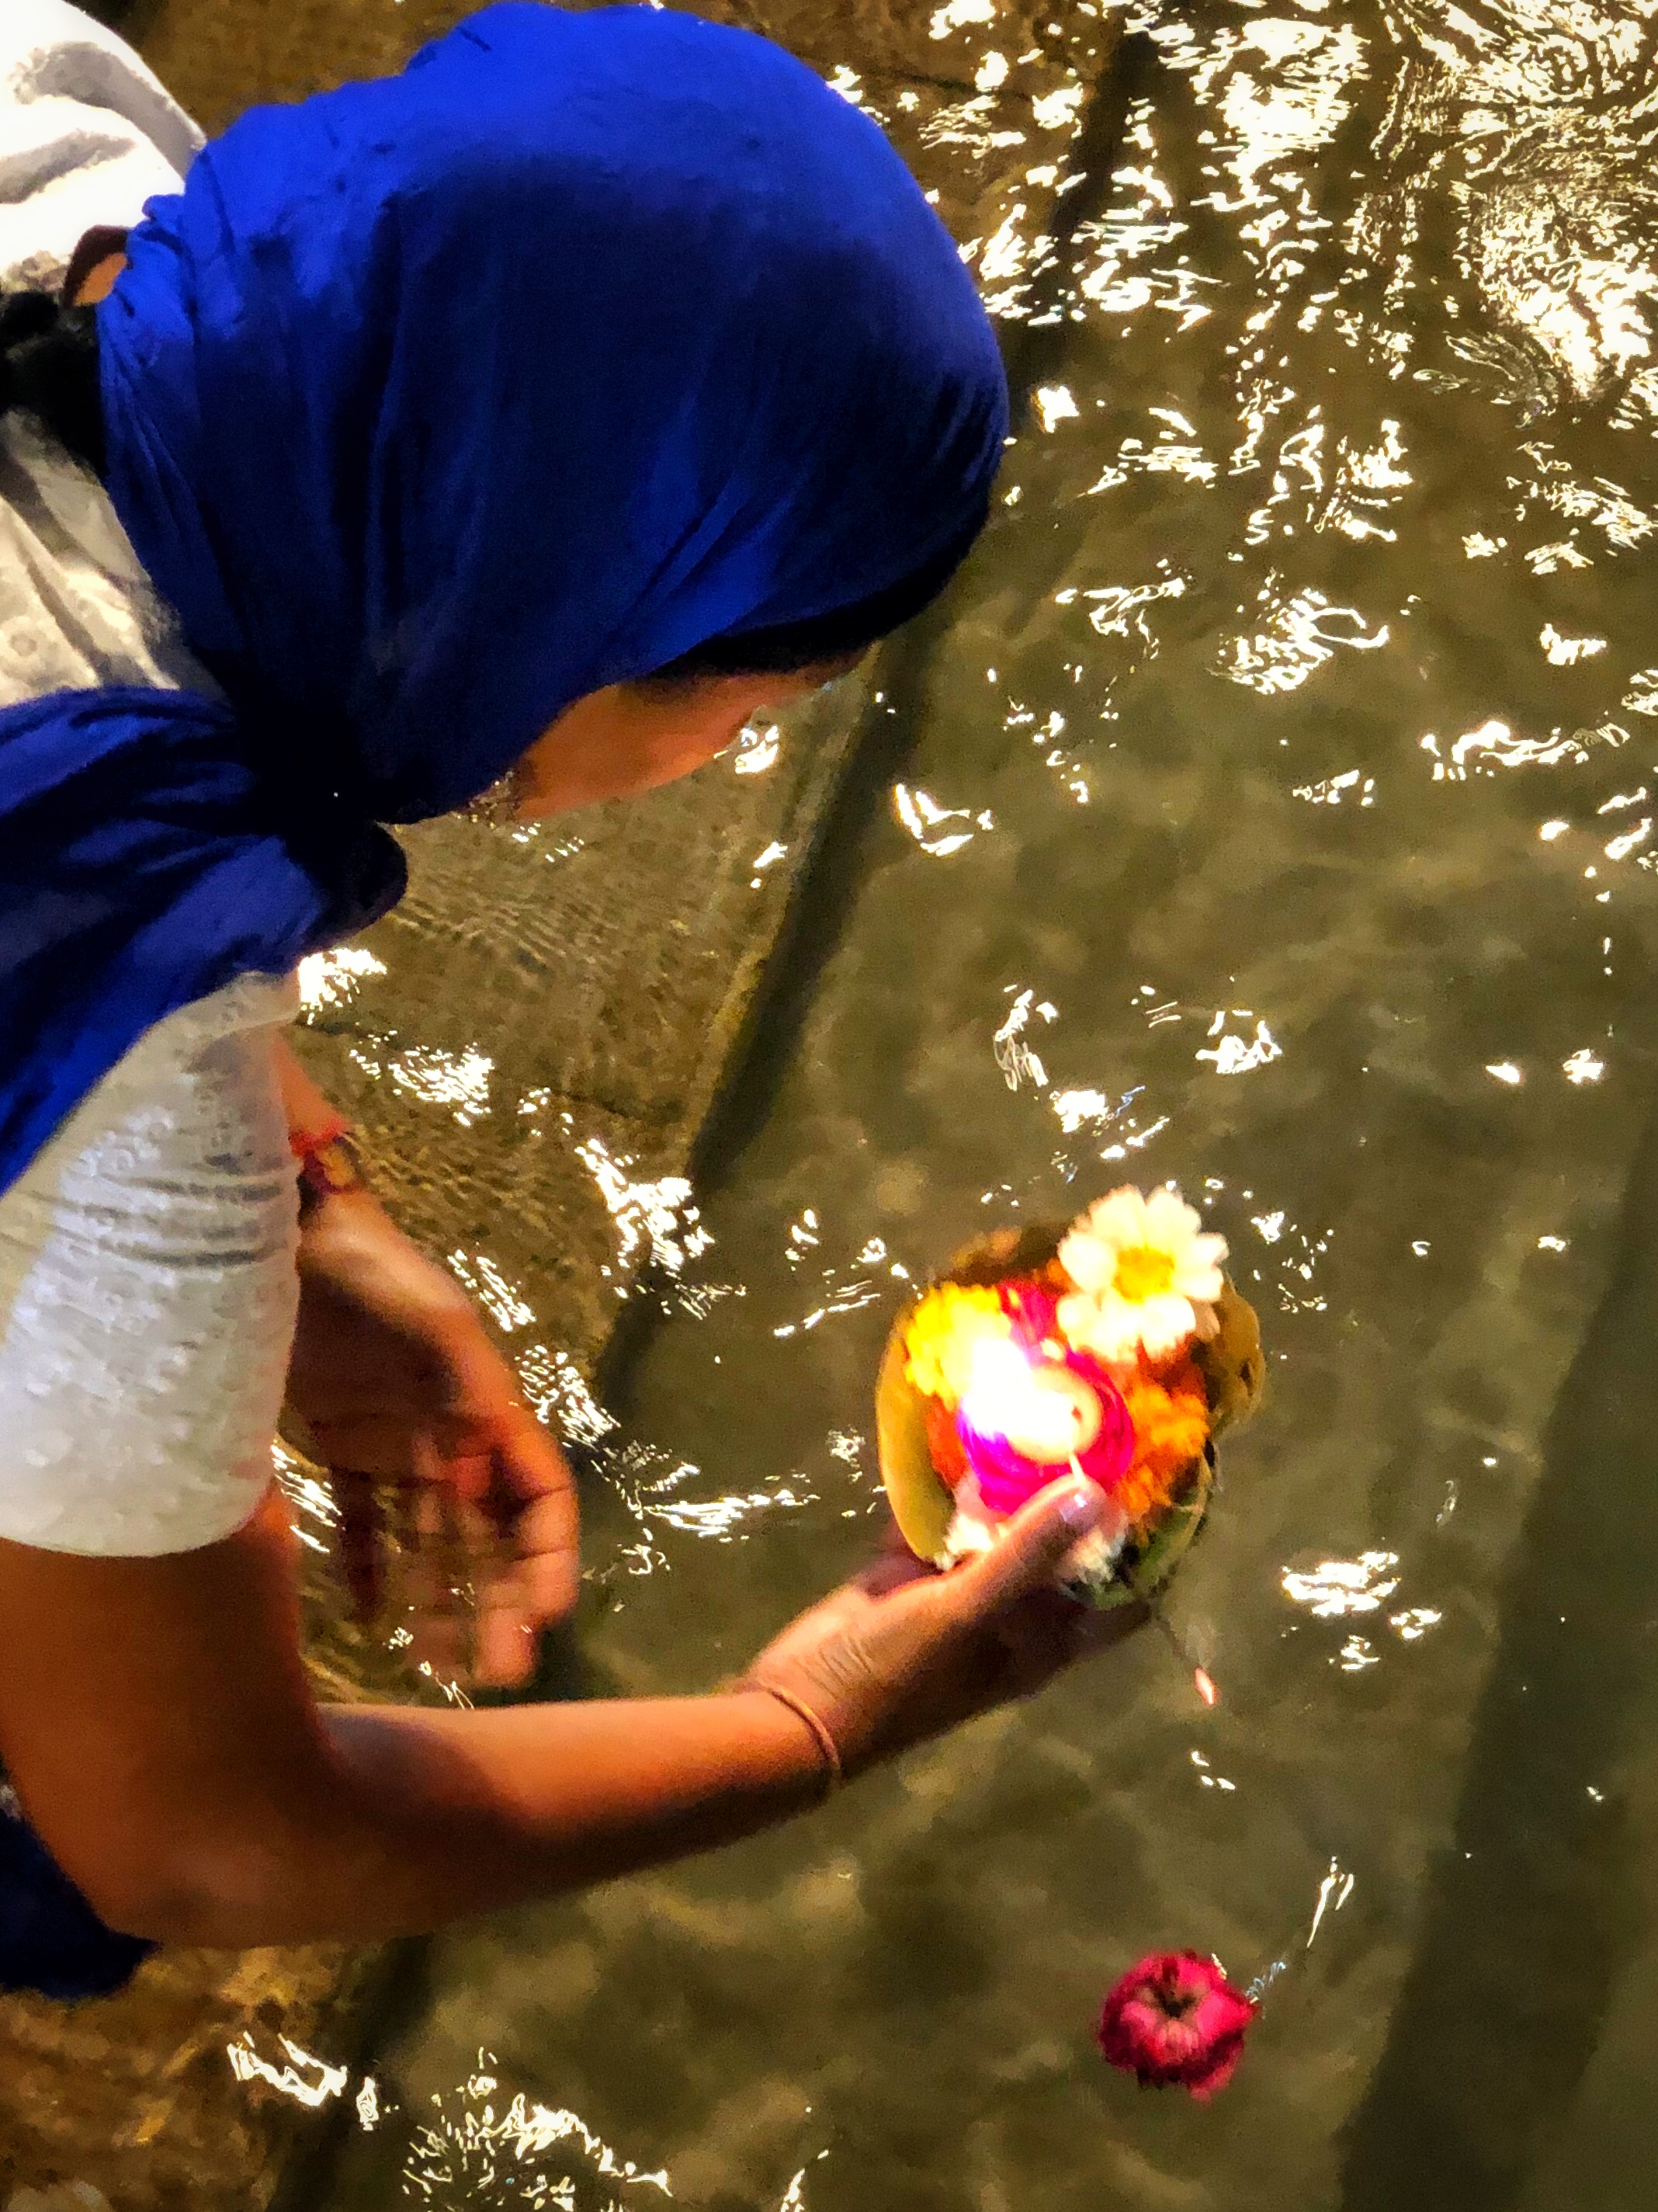 Ganges prayer ritual